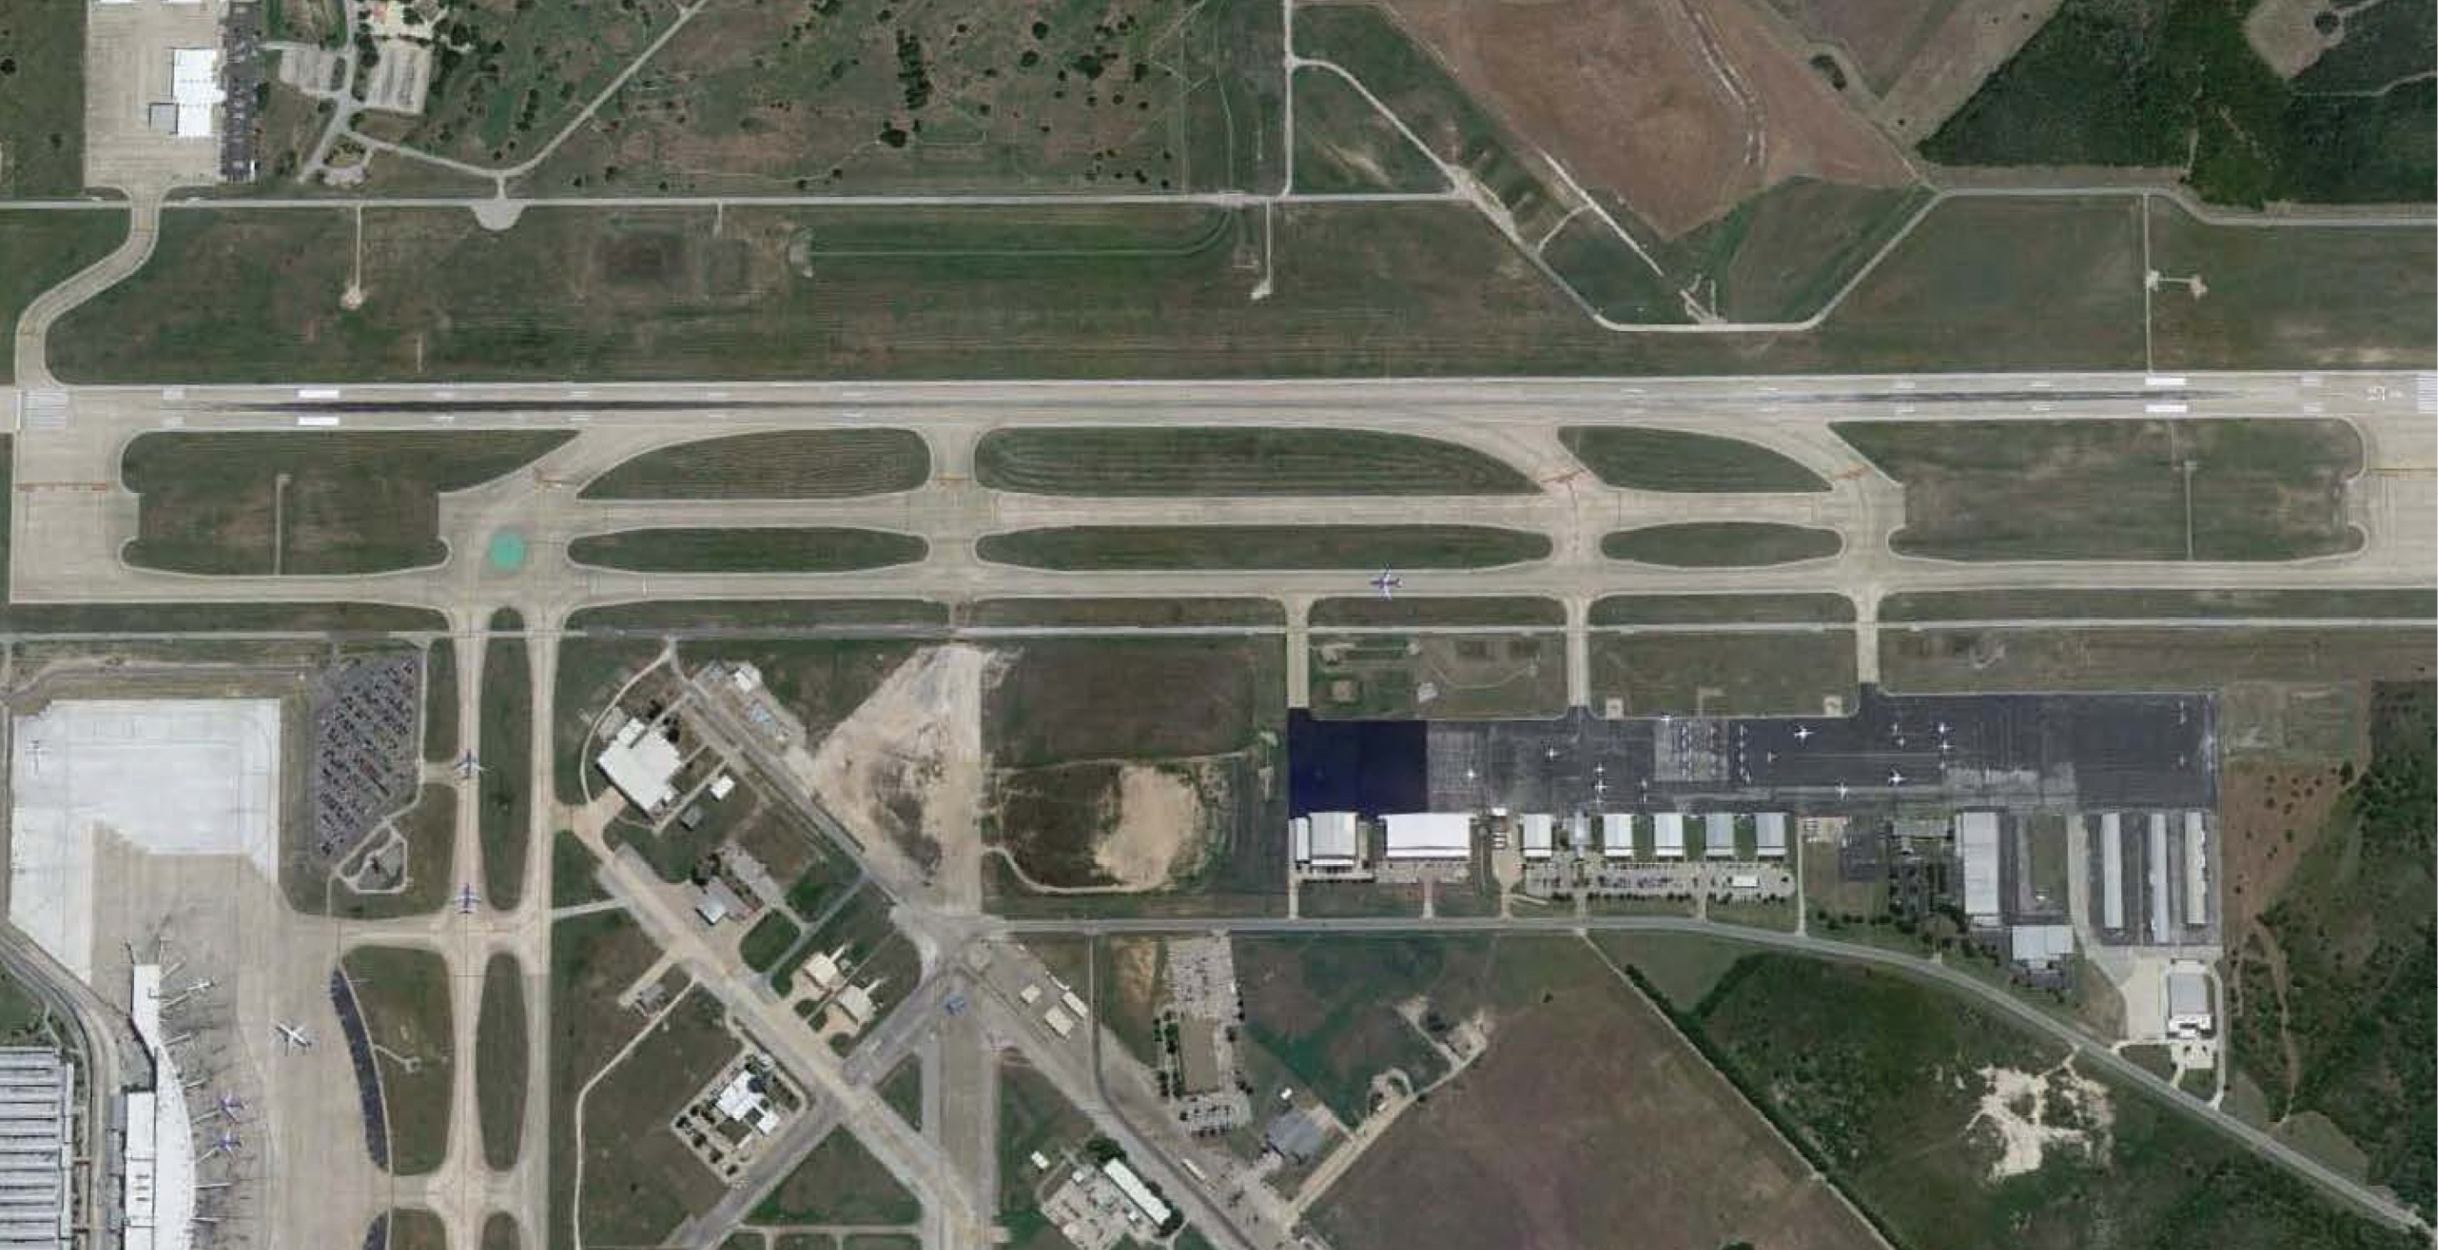 Austin-Bergstrom International Airport